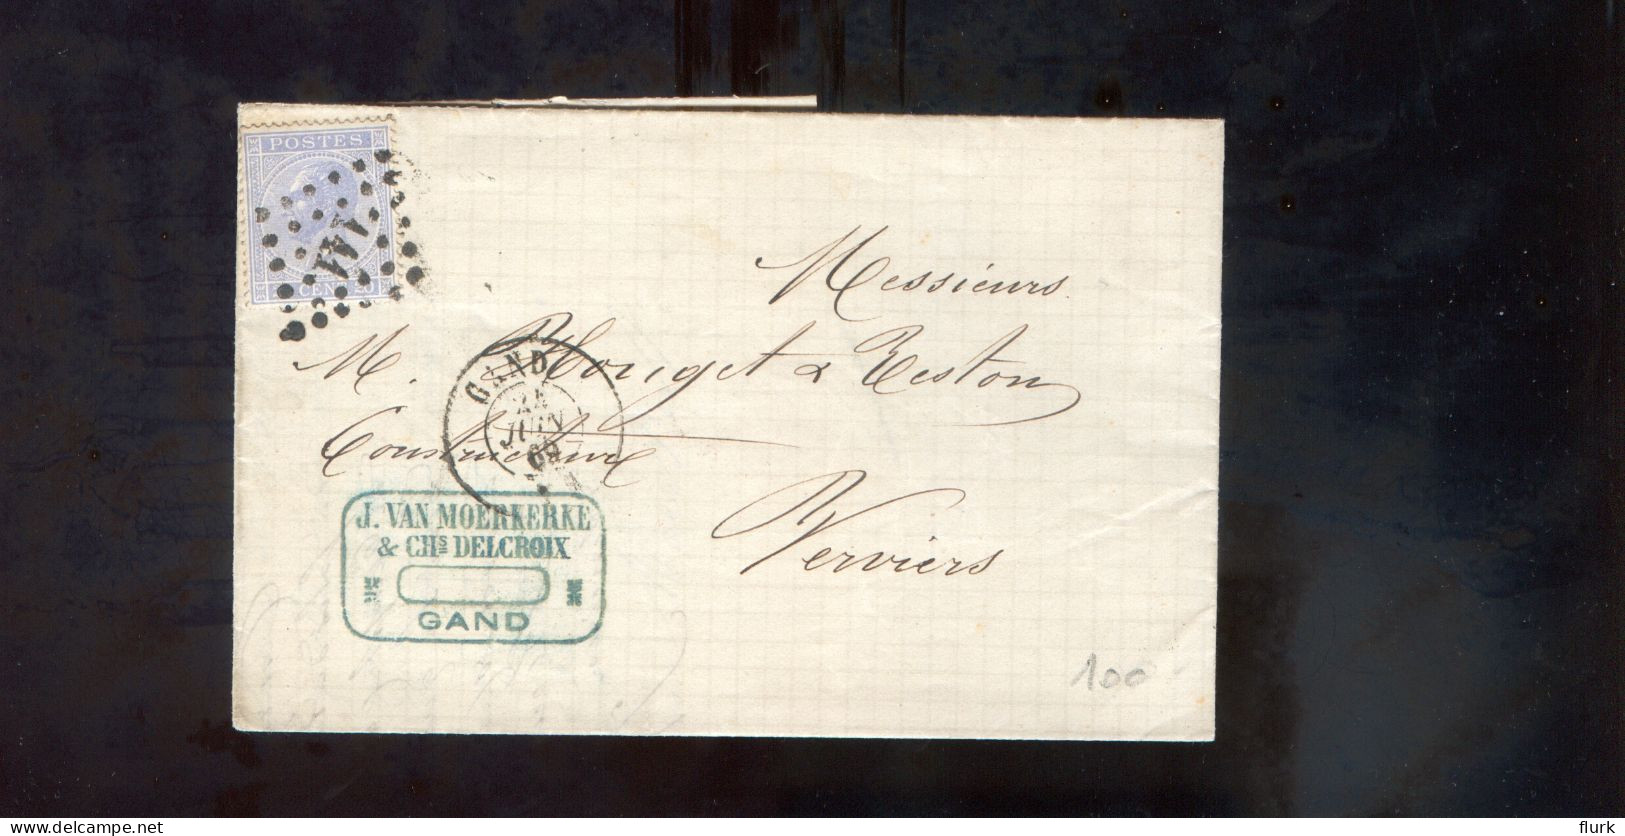 België OCB18 Gestempeld Op Brief Gand-Verviers 1869 Perfect (2 Scans) - 1865-1866 Profile Left